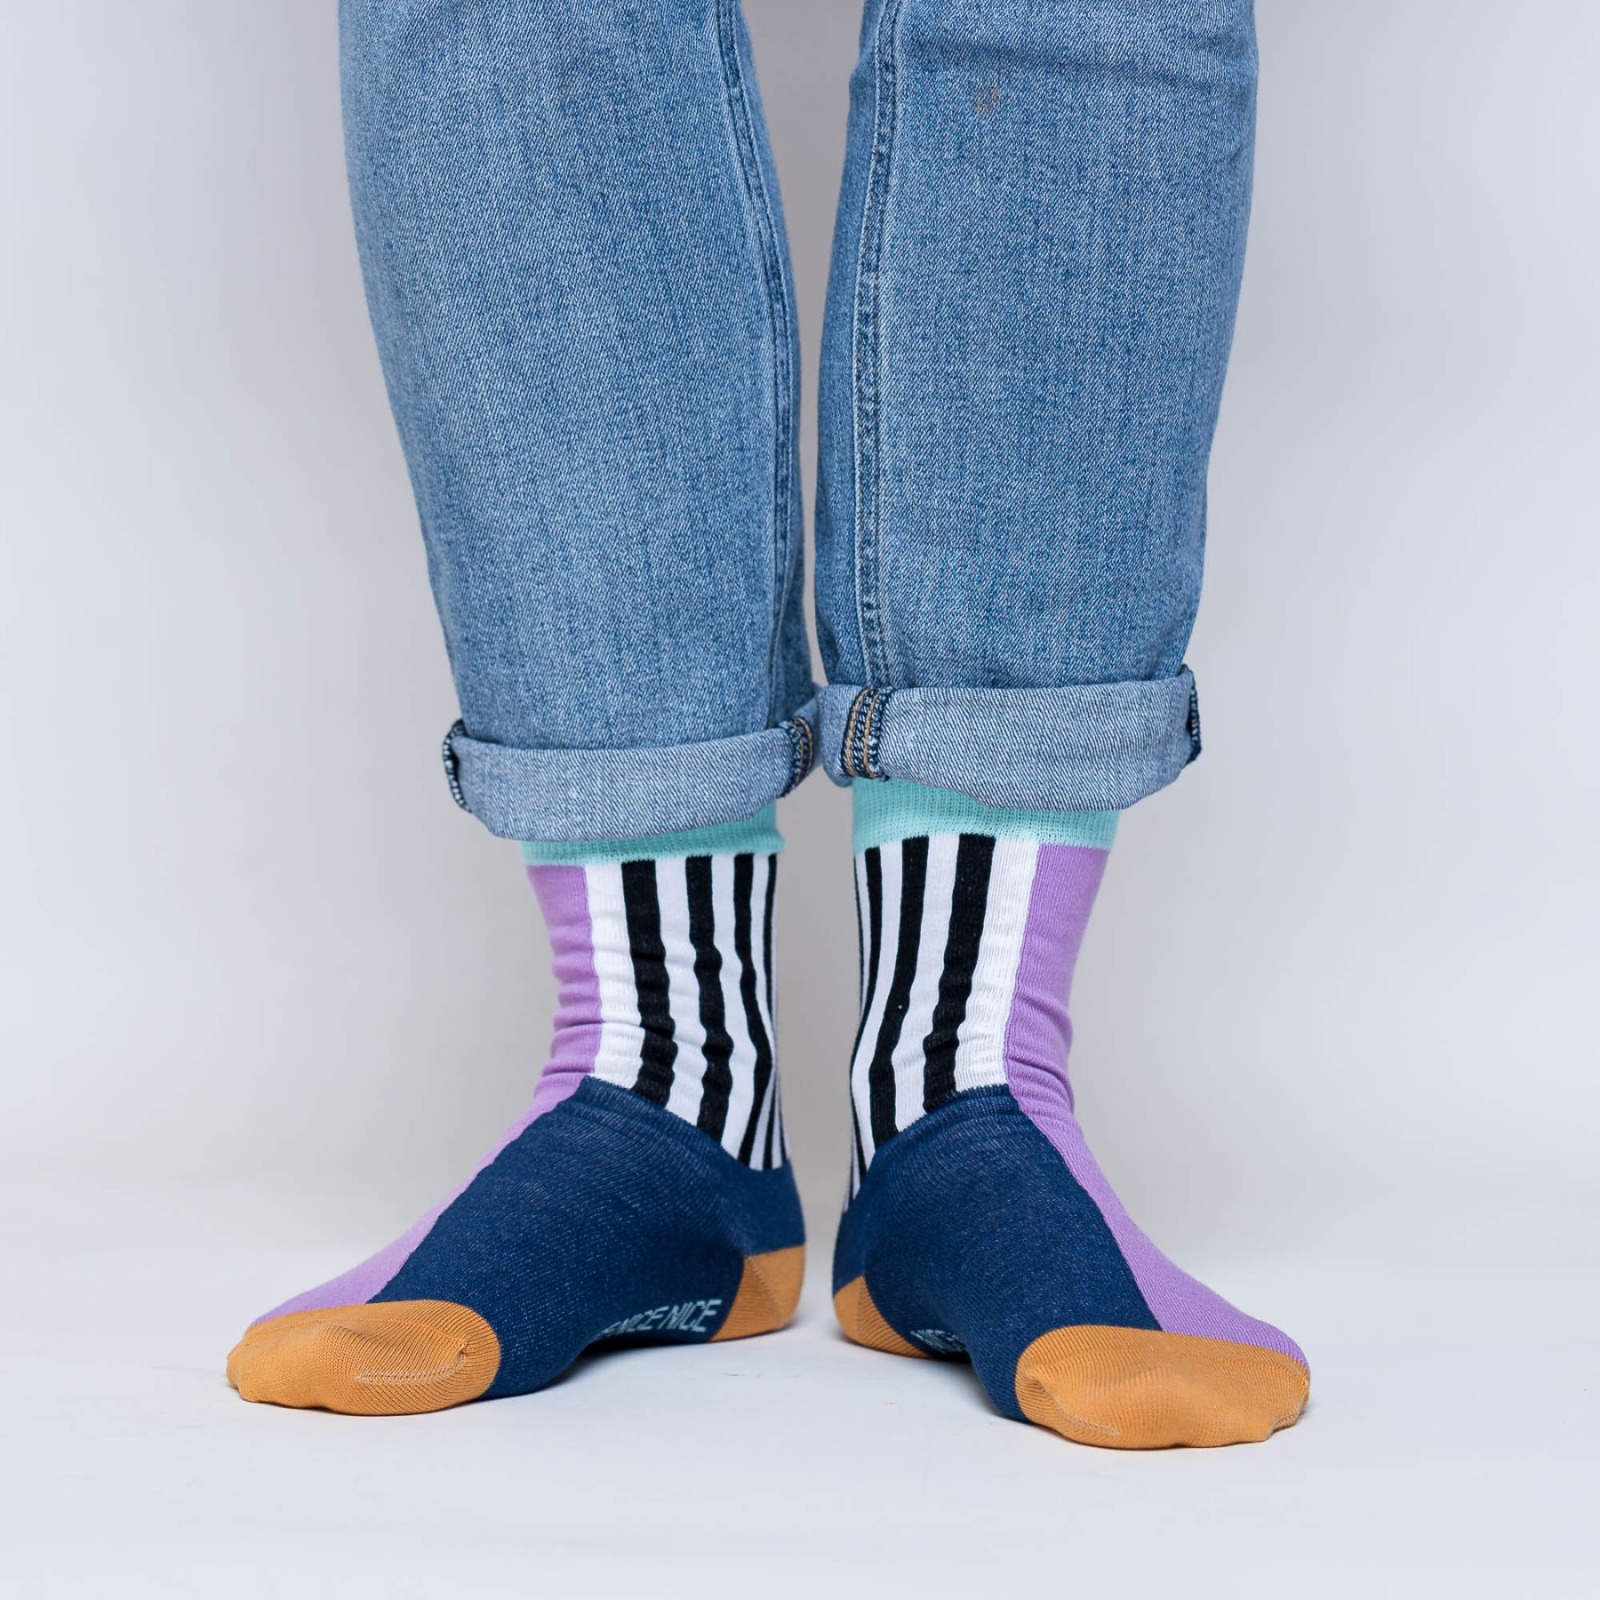 nicenicenice - nice socks half stripes purple 3